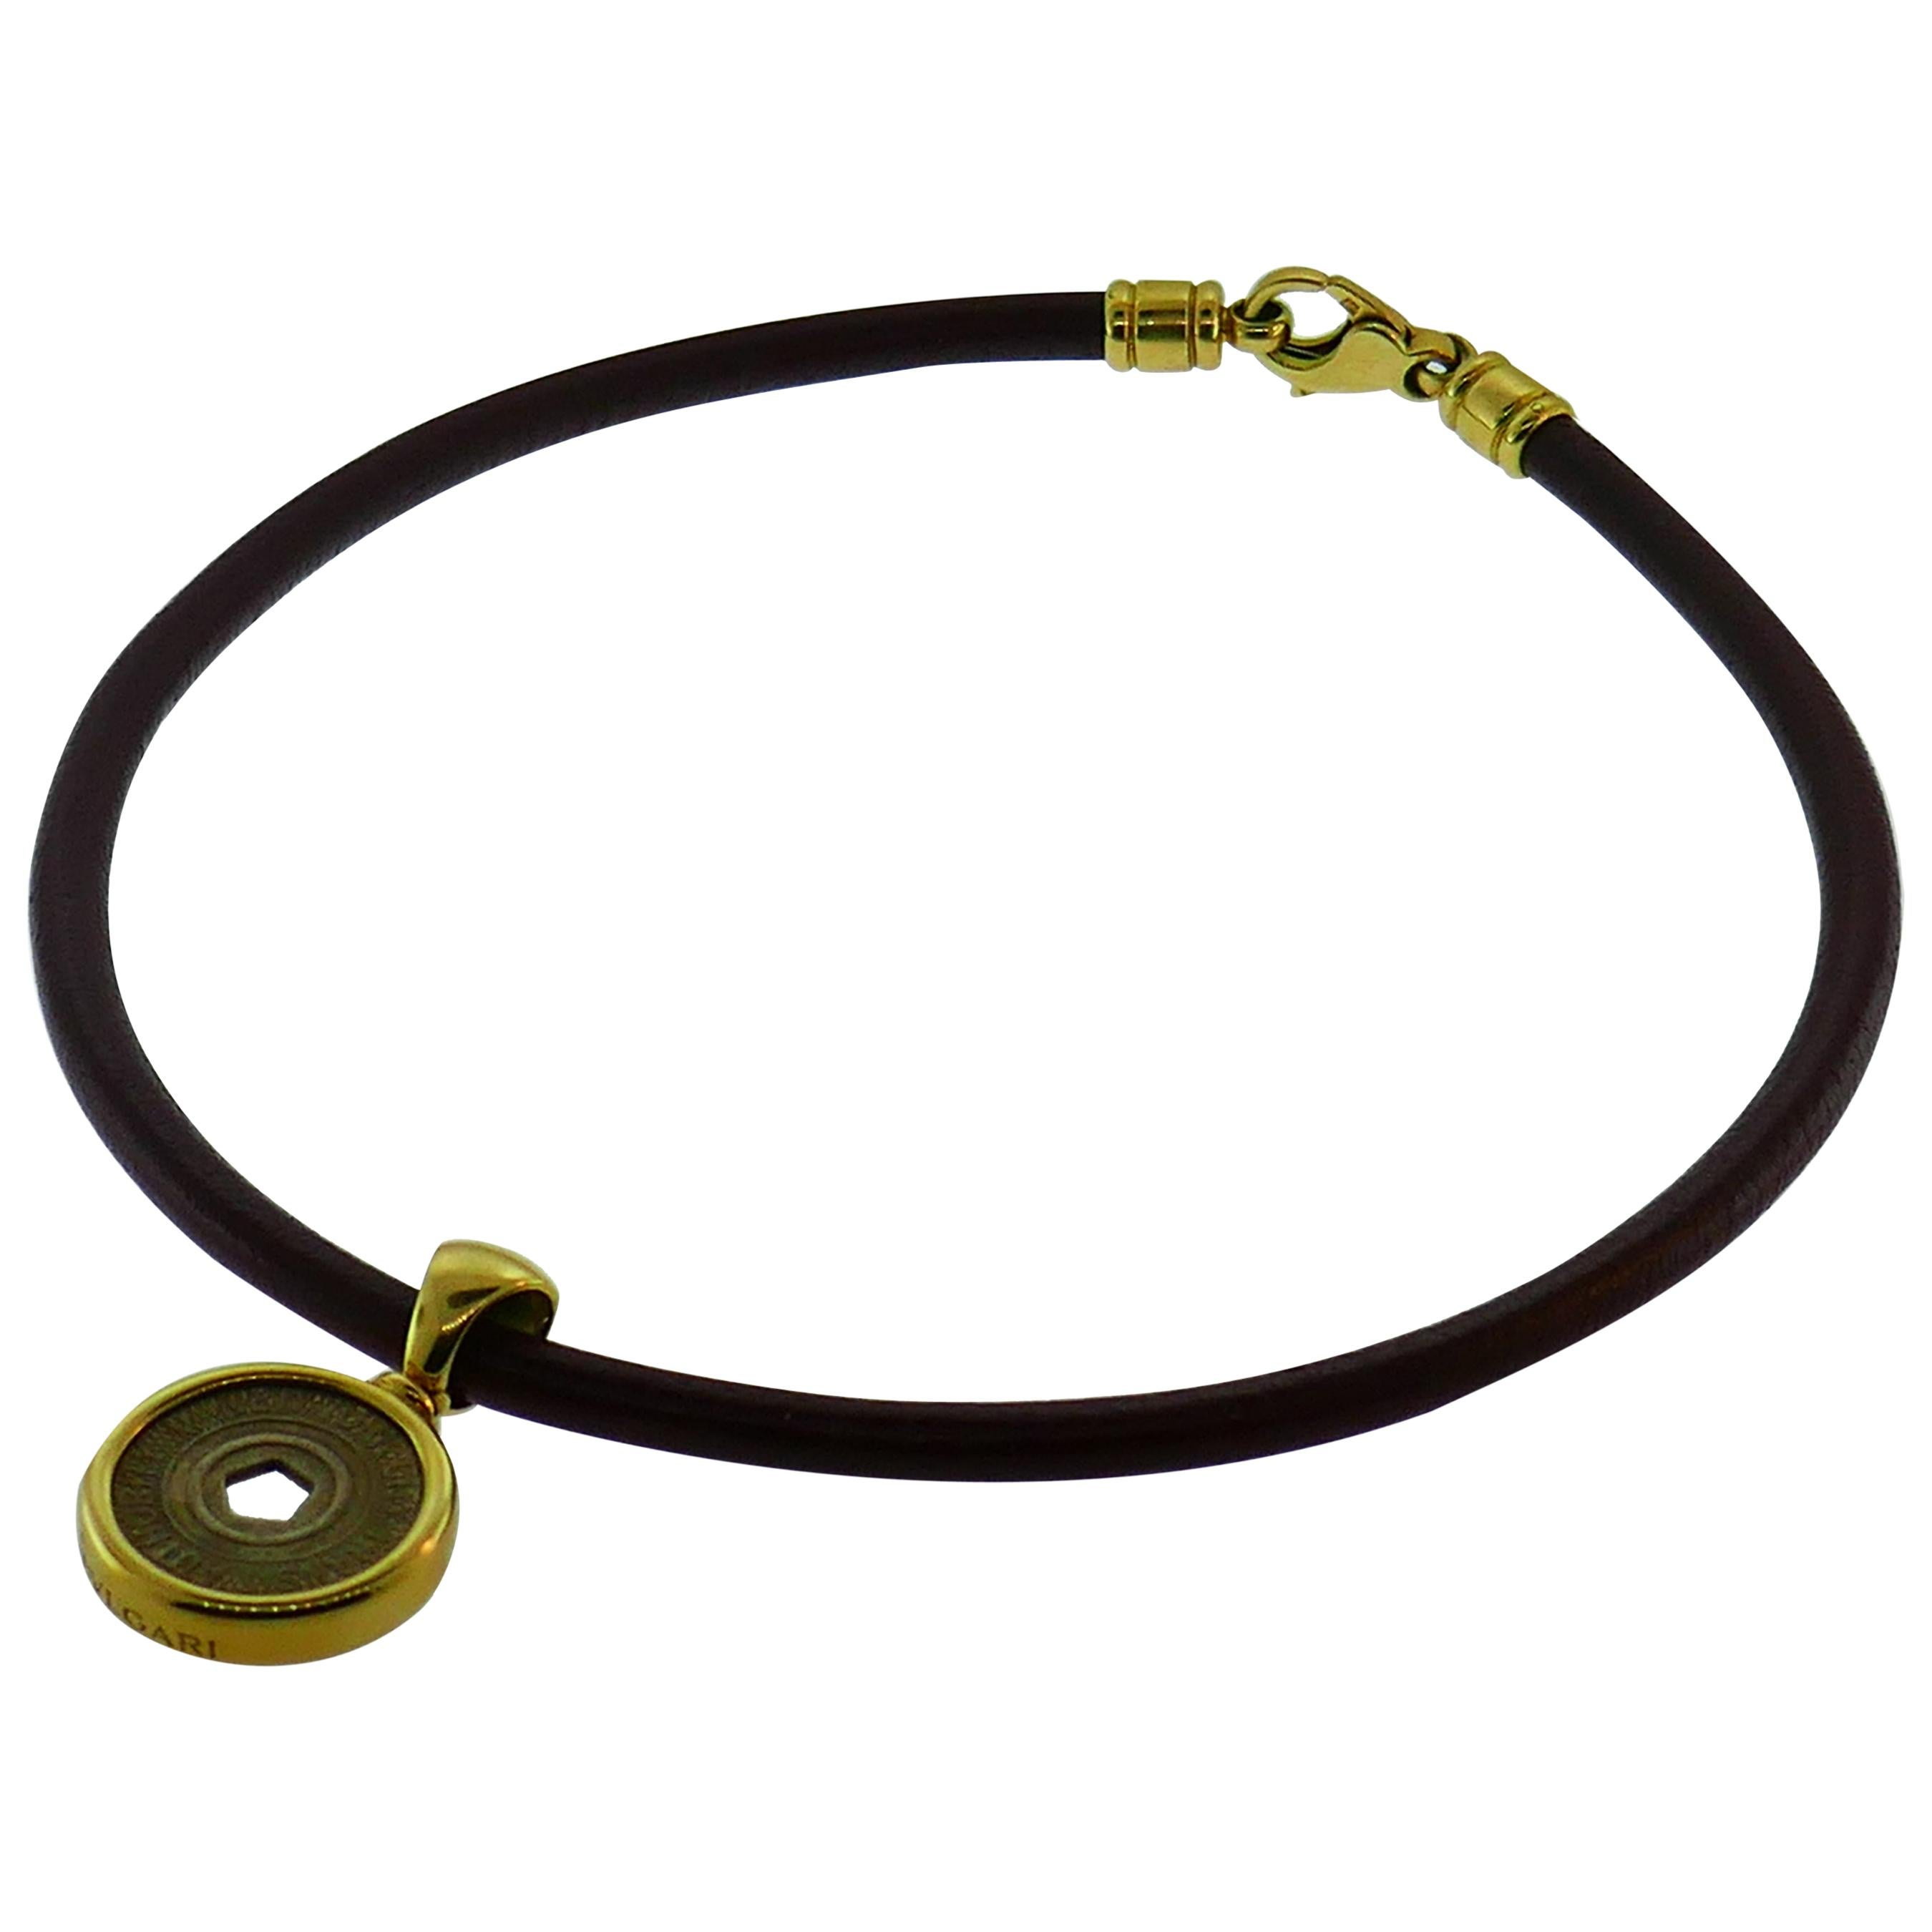 Bvlgari Italy 18 Karat Gold, Leather and New York Subway Token Necklace Rare